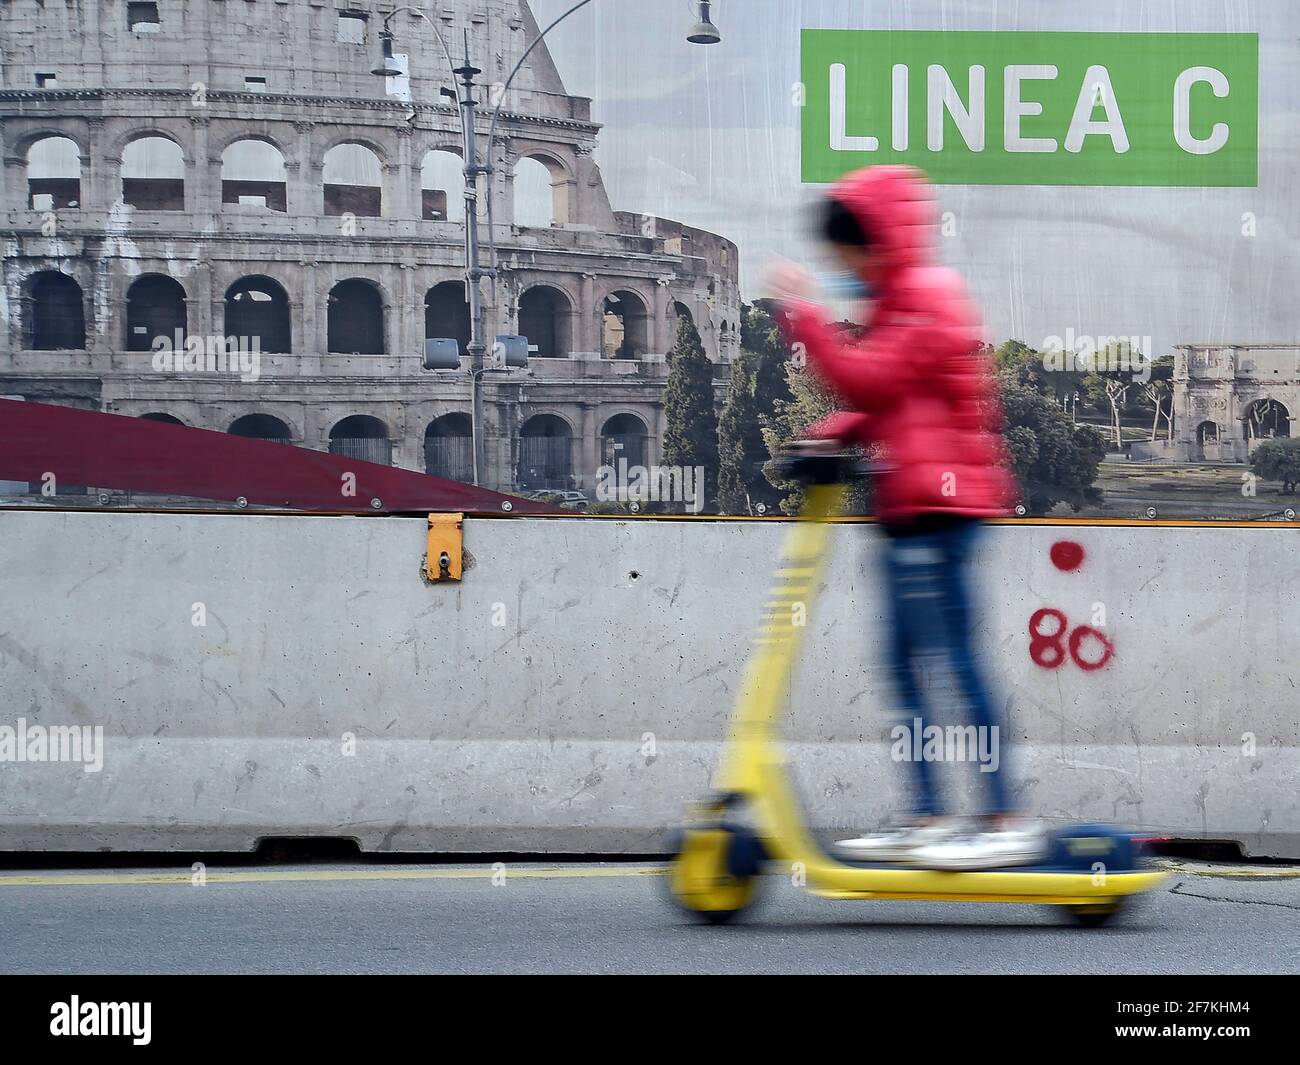 Italy, Rome, March 13, 2021 : People riding an electric scooter near the Coliseum area   Photo © Fabio Mazzarella/Sintesi/Alamy Stock Photo Stock Photo